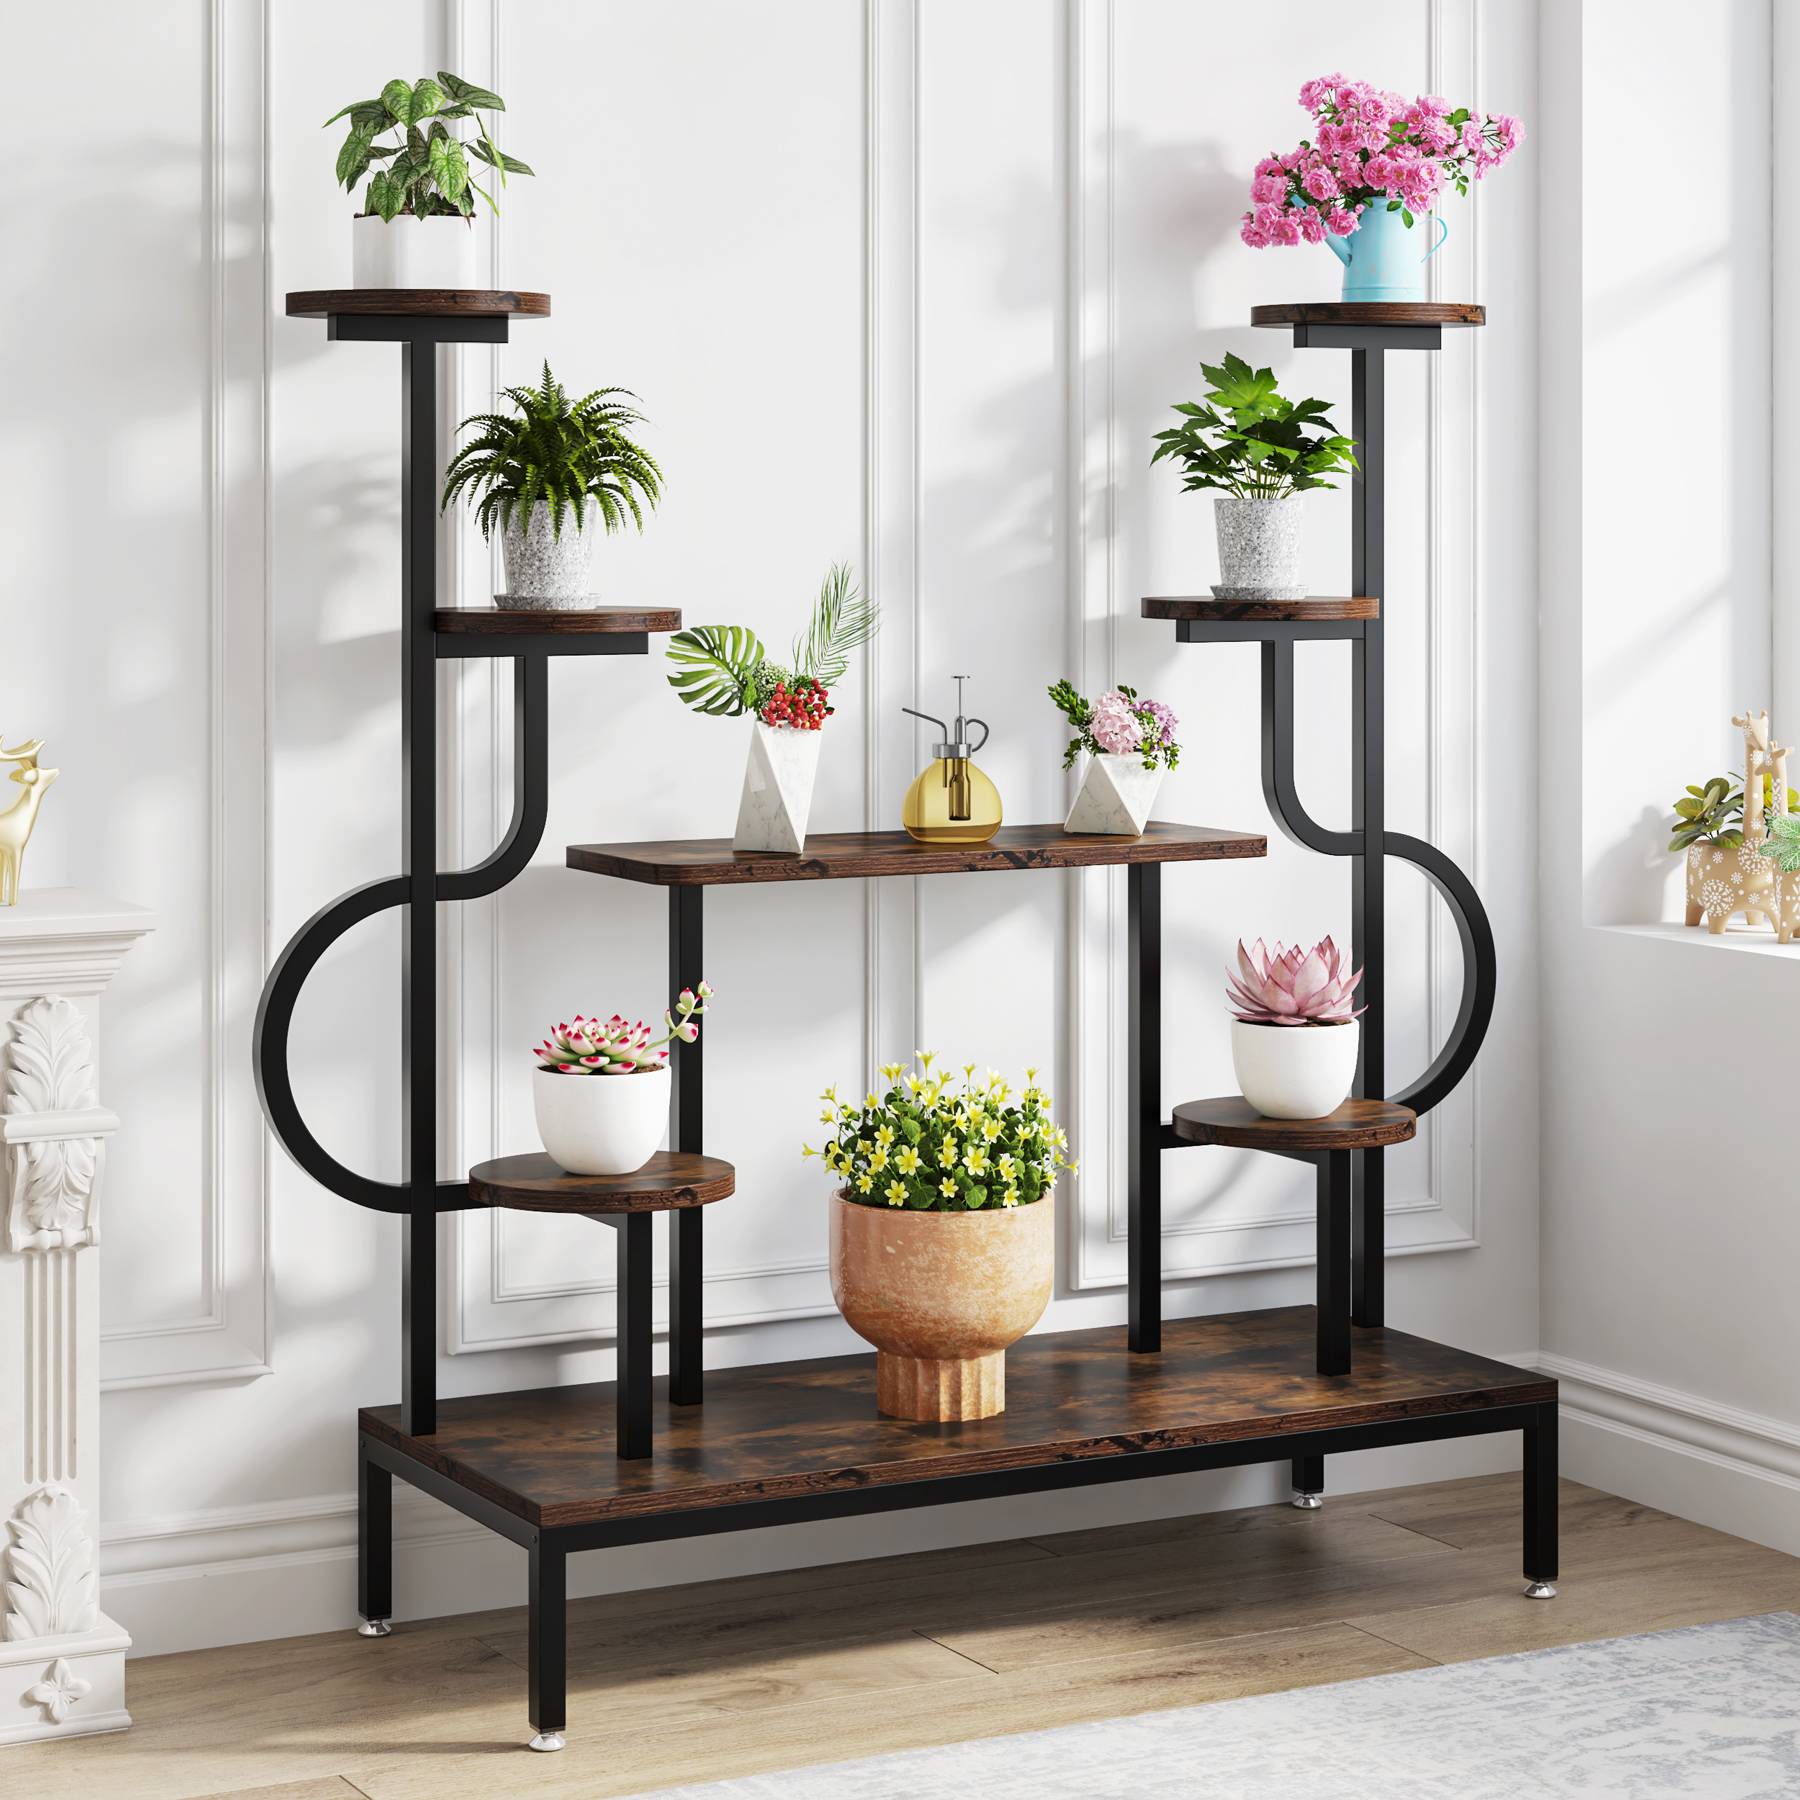 Buy Wholesale China Creative Cabinet Hanging Basket Hanging Rack